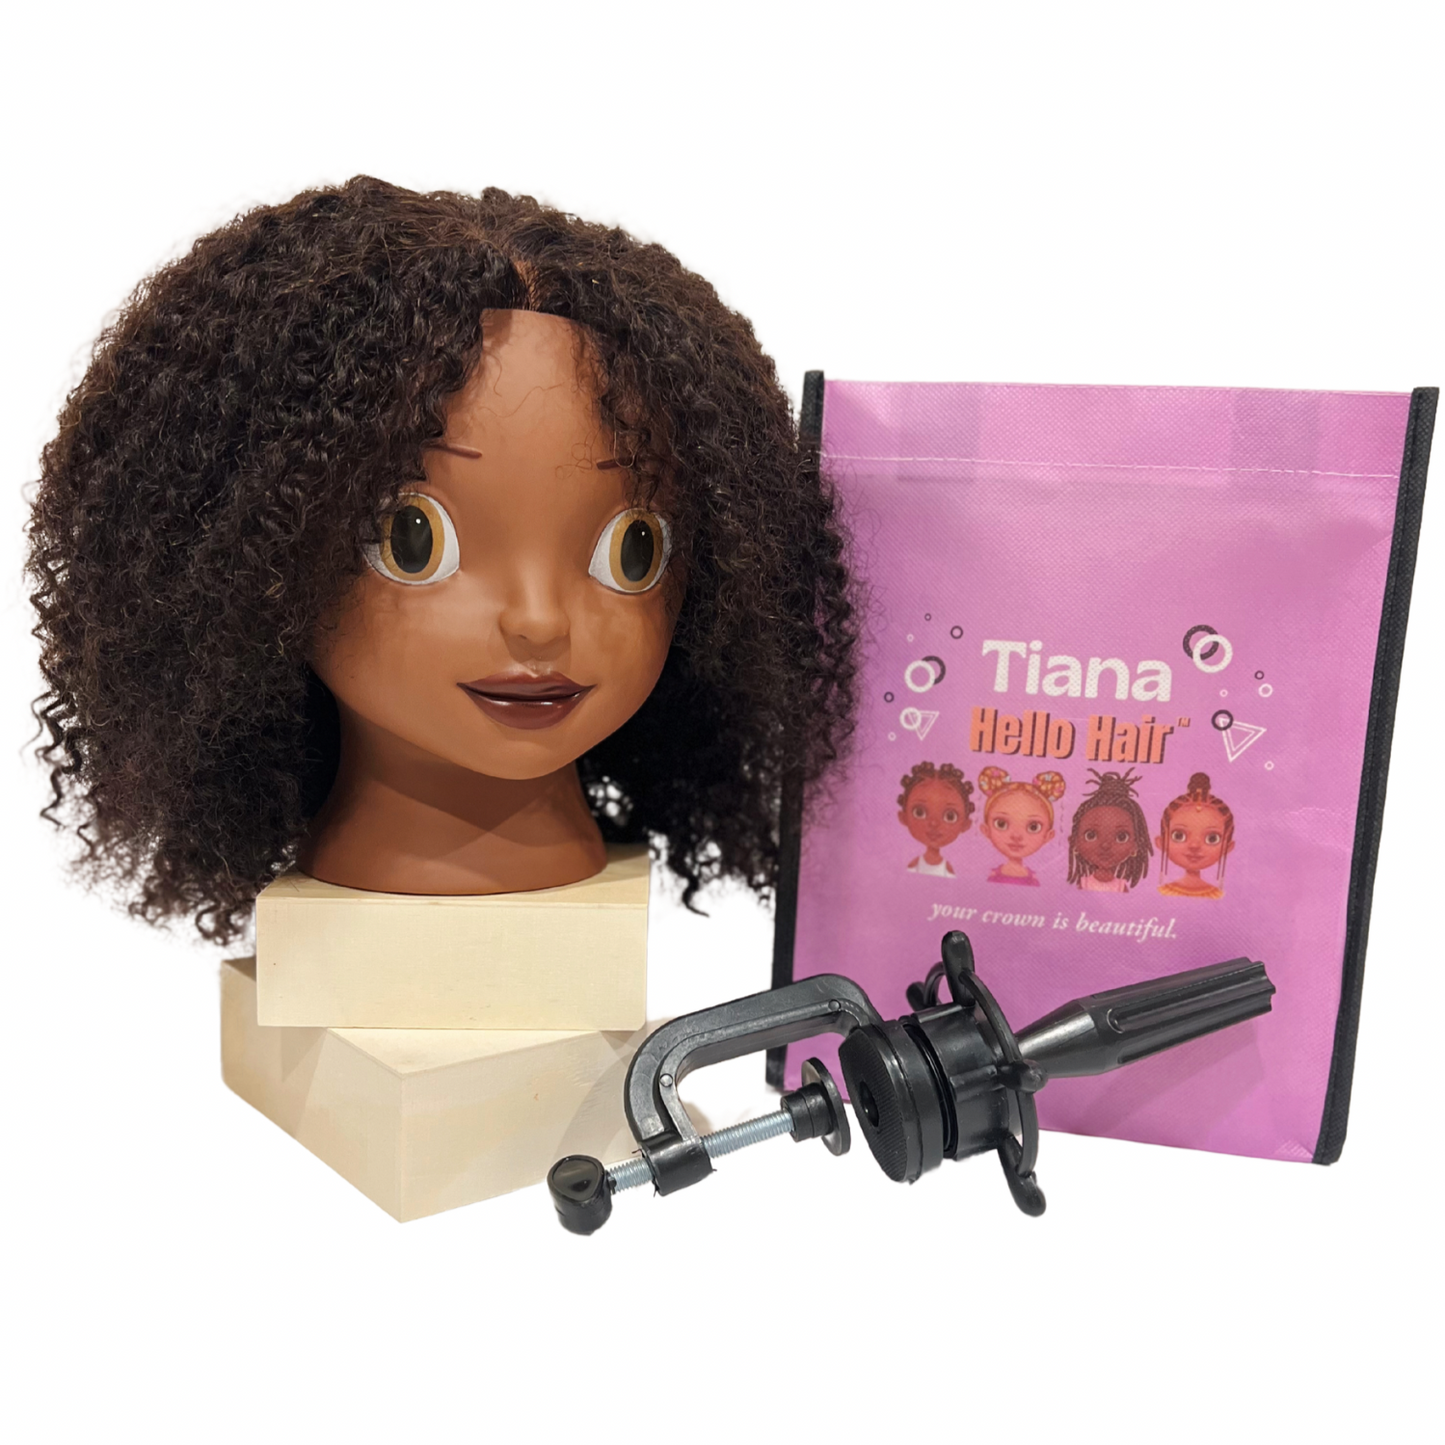 Tiana Styling Doll